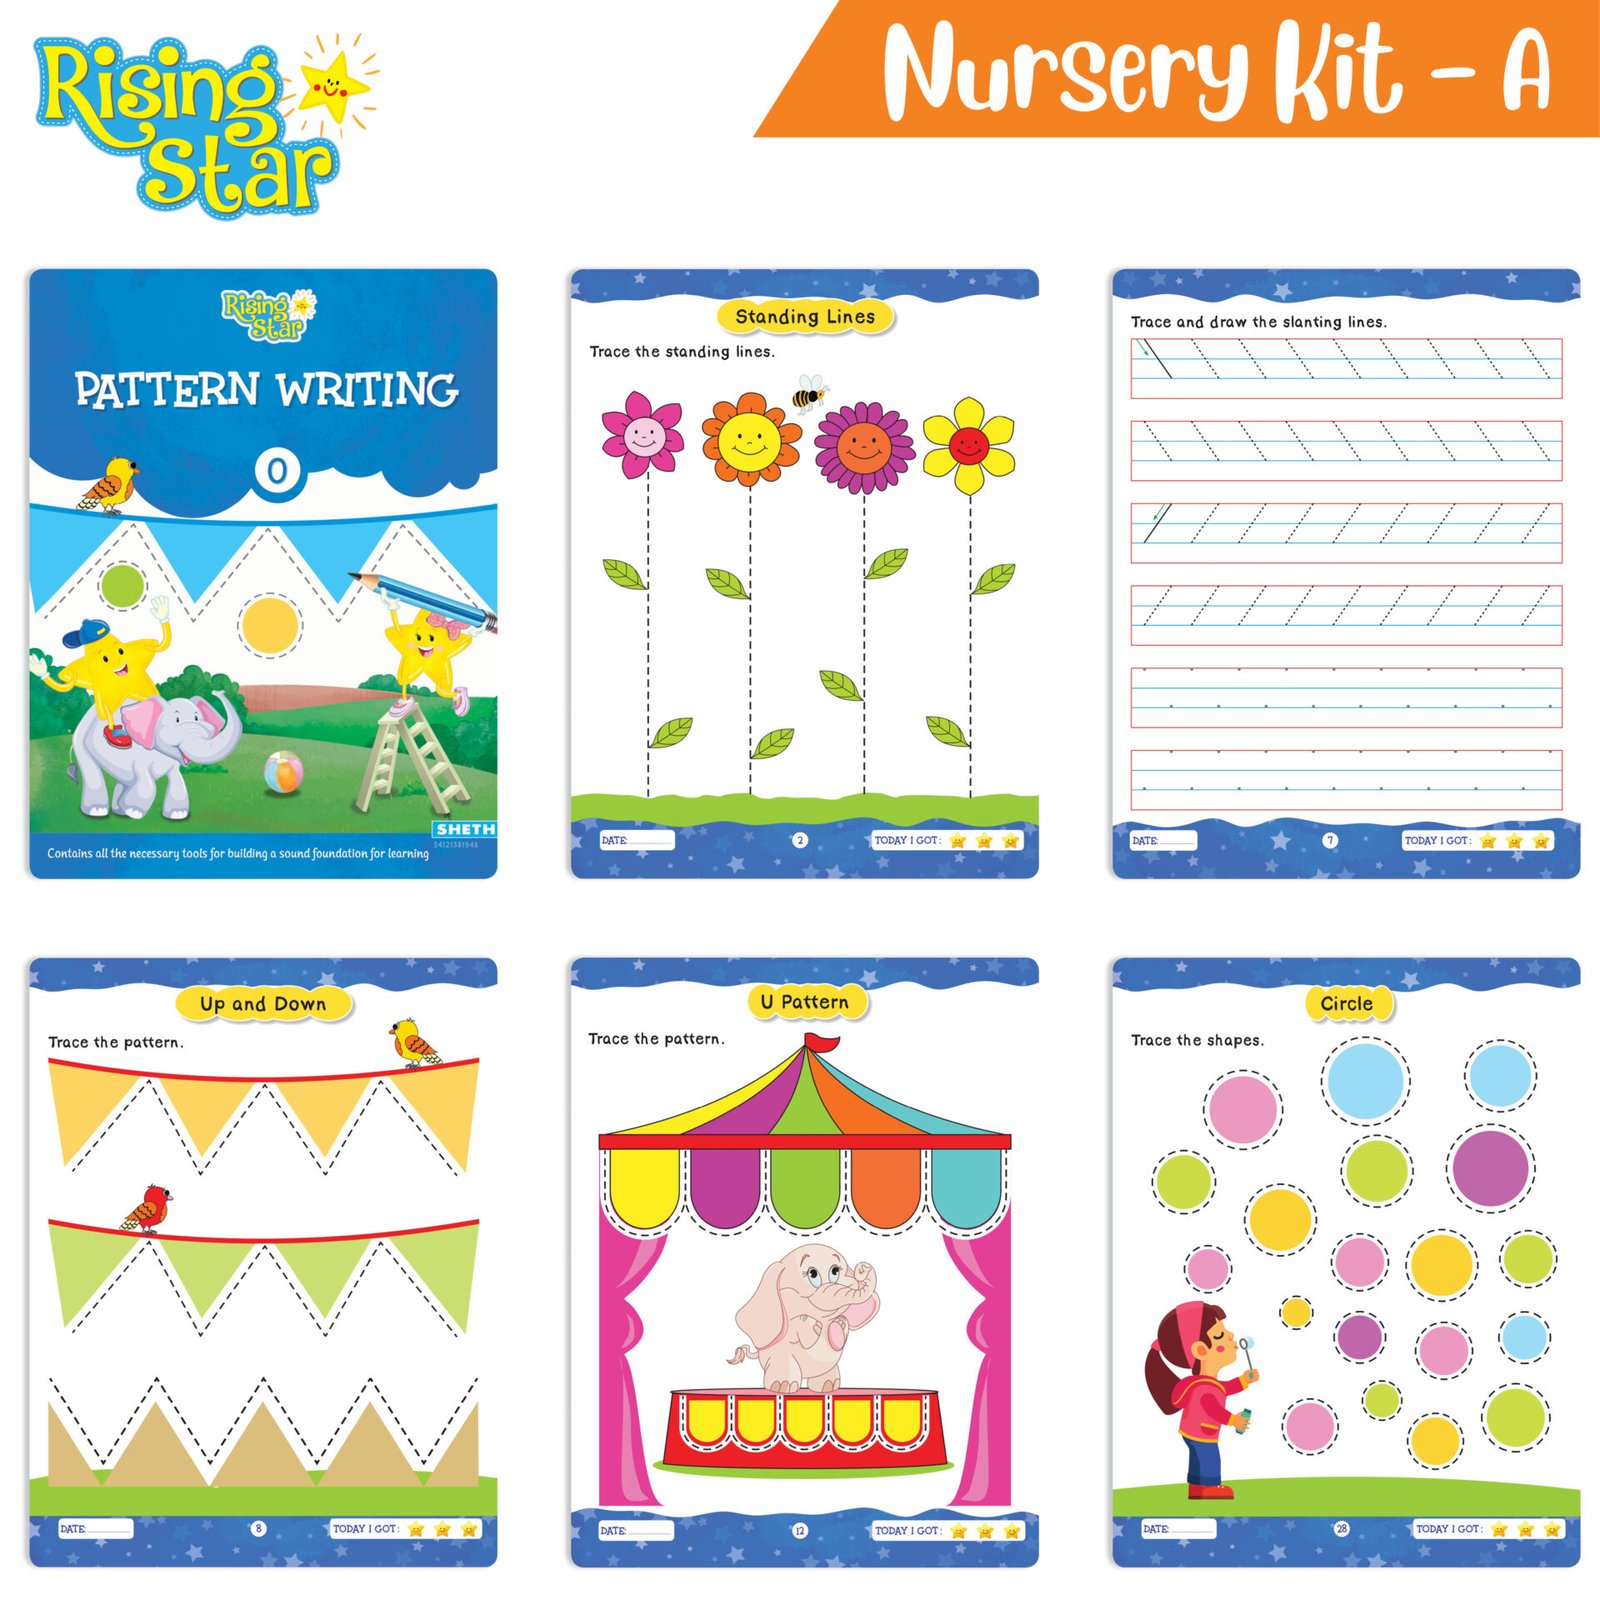 Rising Star Preschool Nurery Kit A 02 Pattern Writing 0